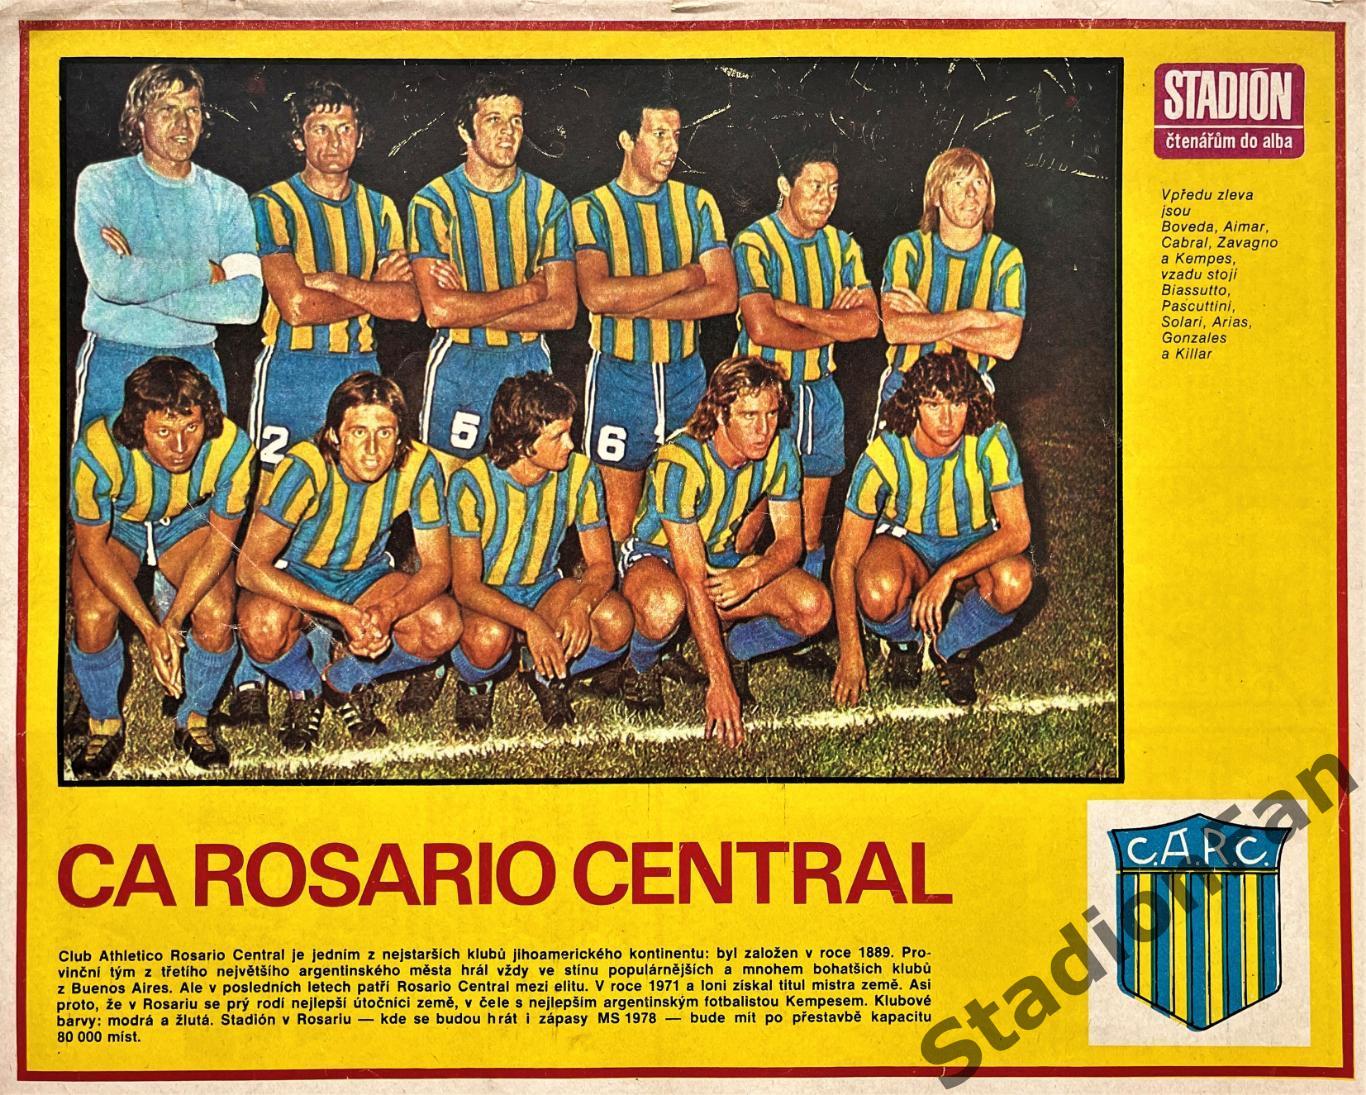 Постер из журнала Стадион (Stadion) - Rosario Central , 1975.